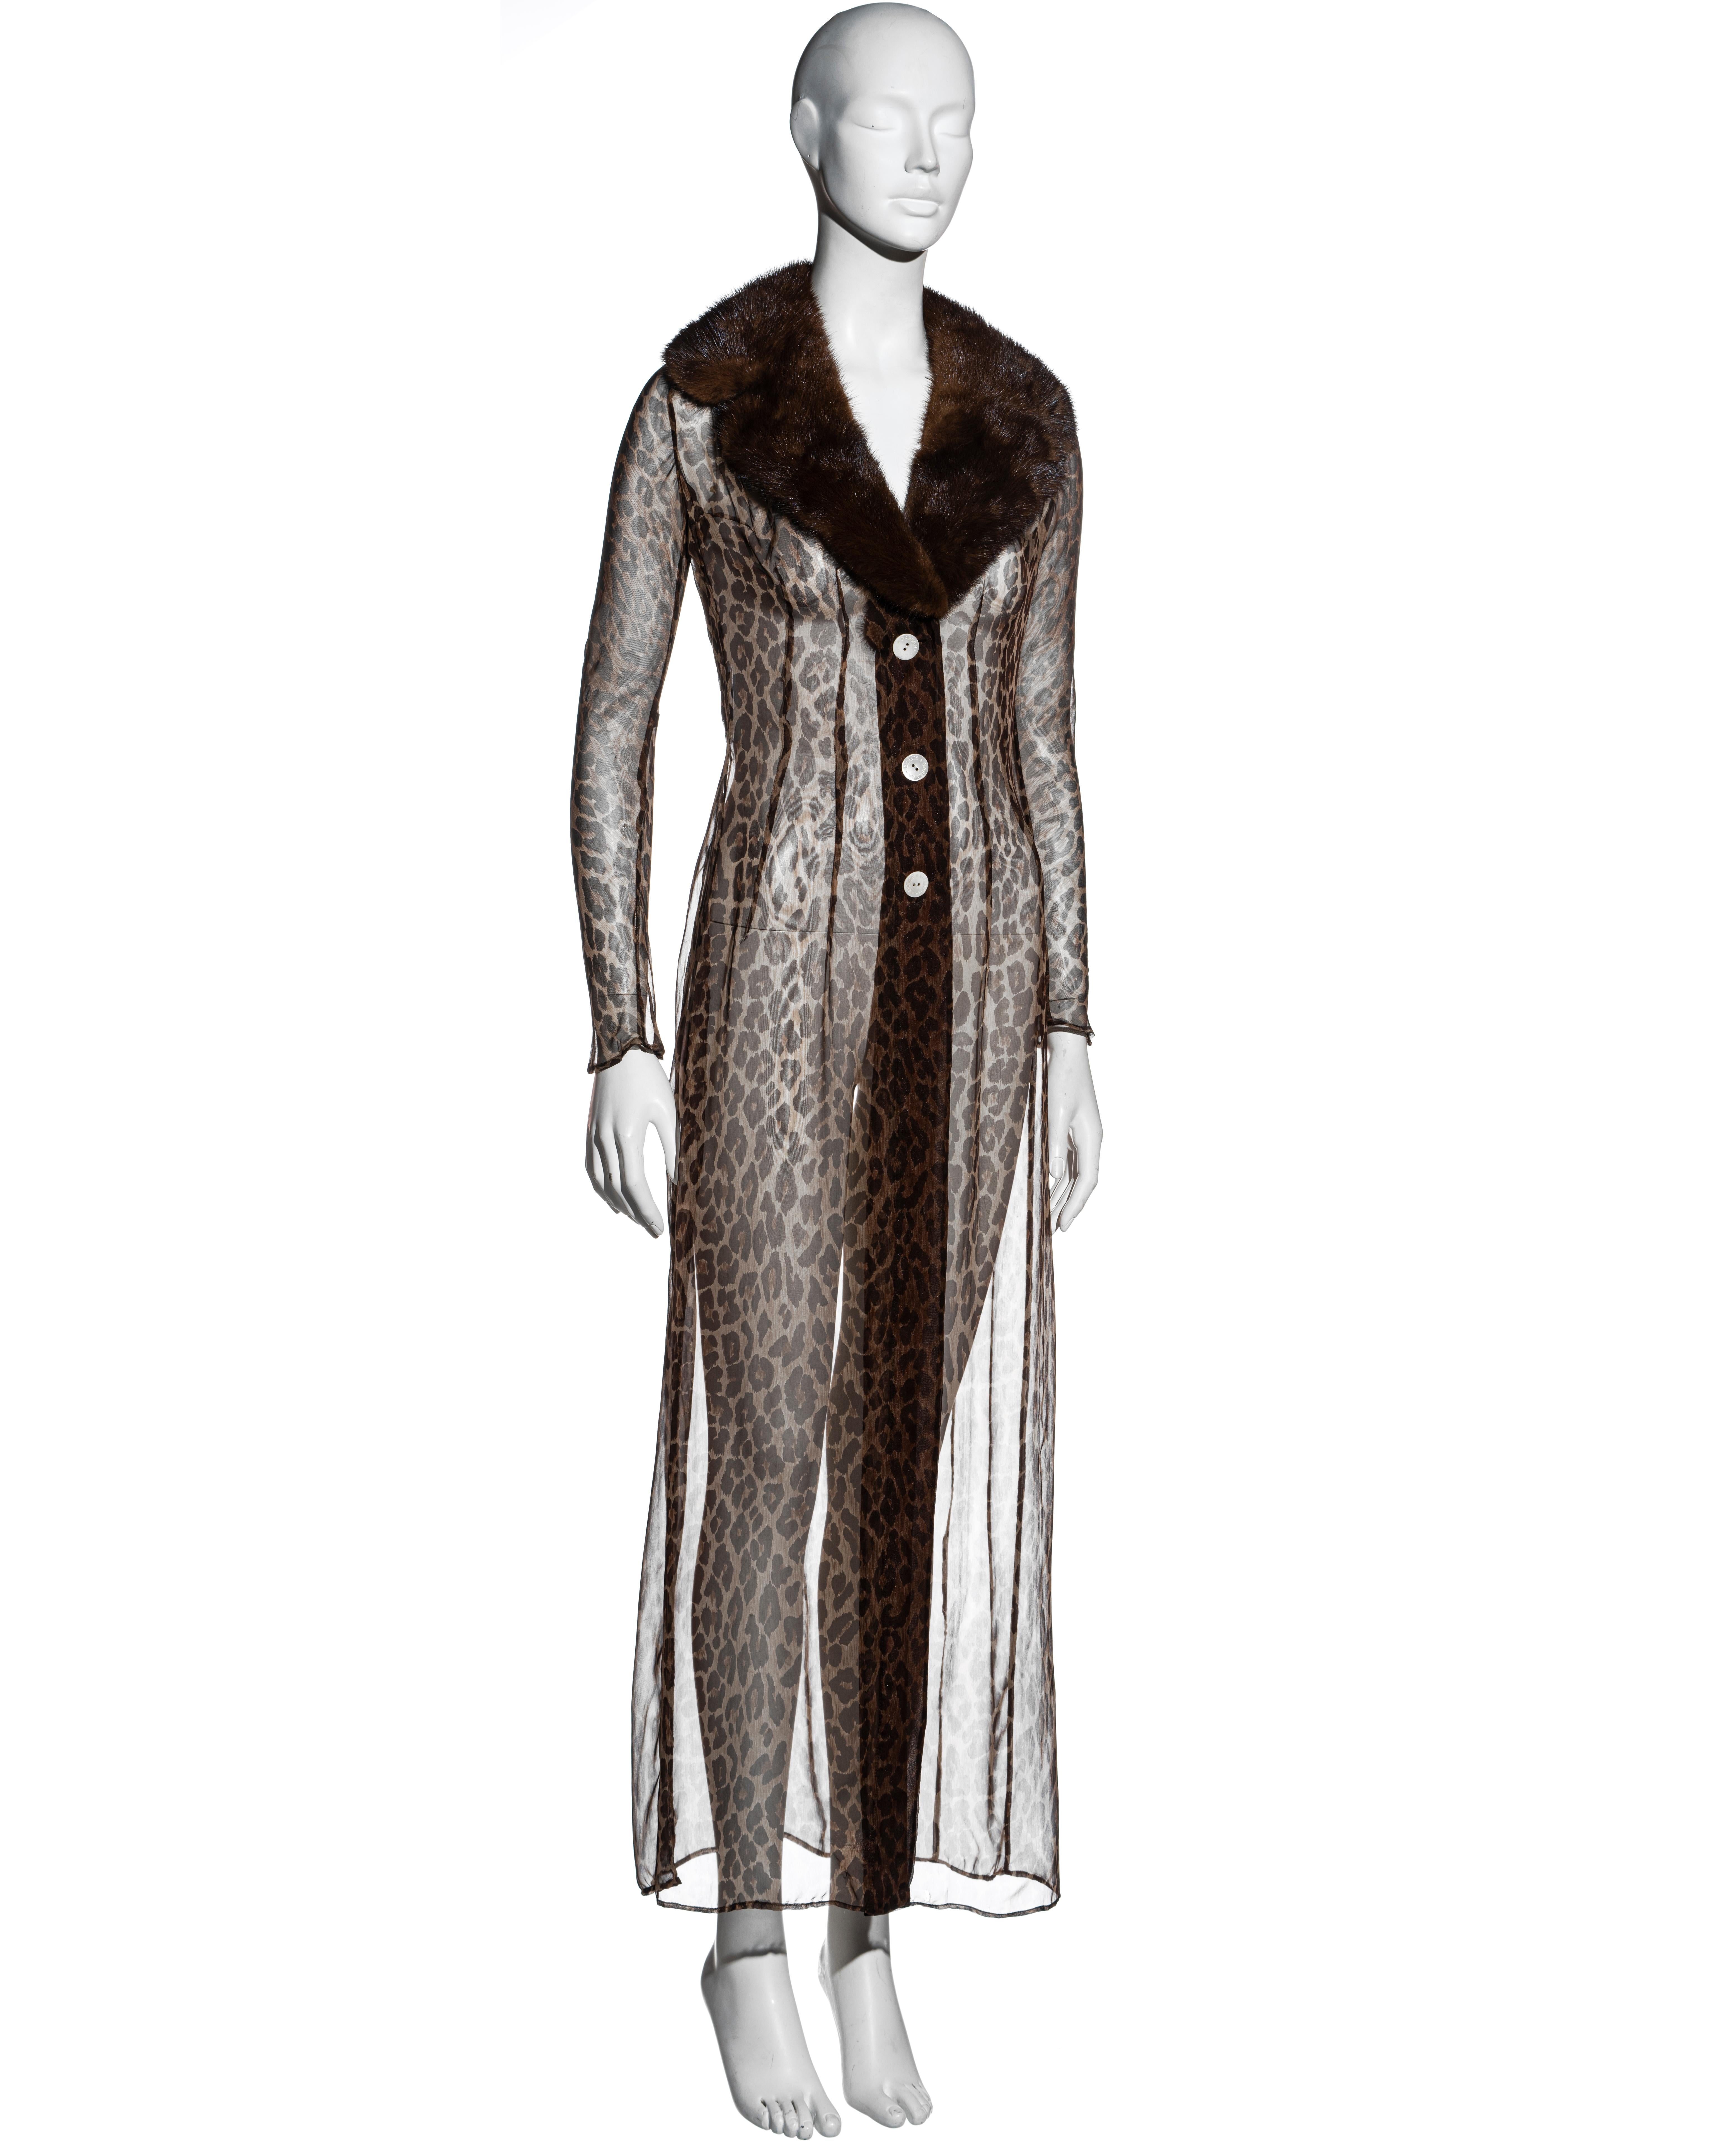 Women's Dolce & Gabbana leopard print silk chiffon dress coat with fur collar, ss 1997